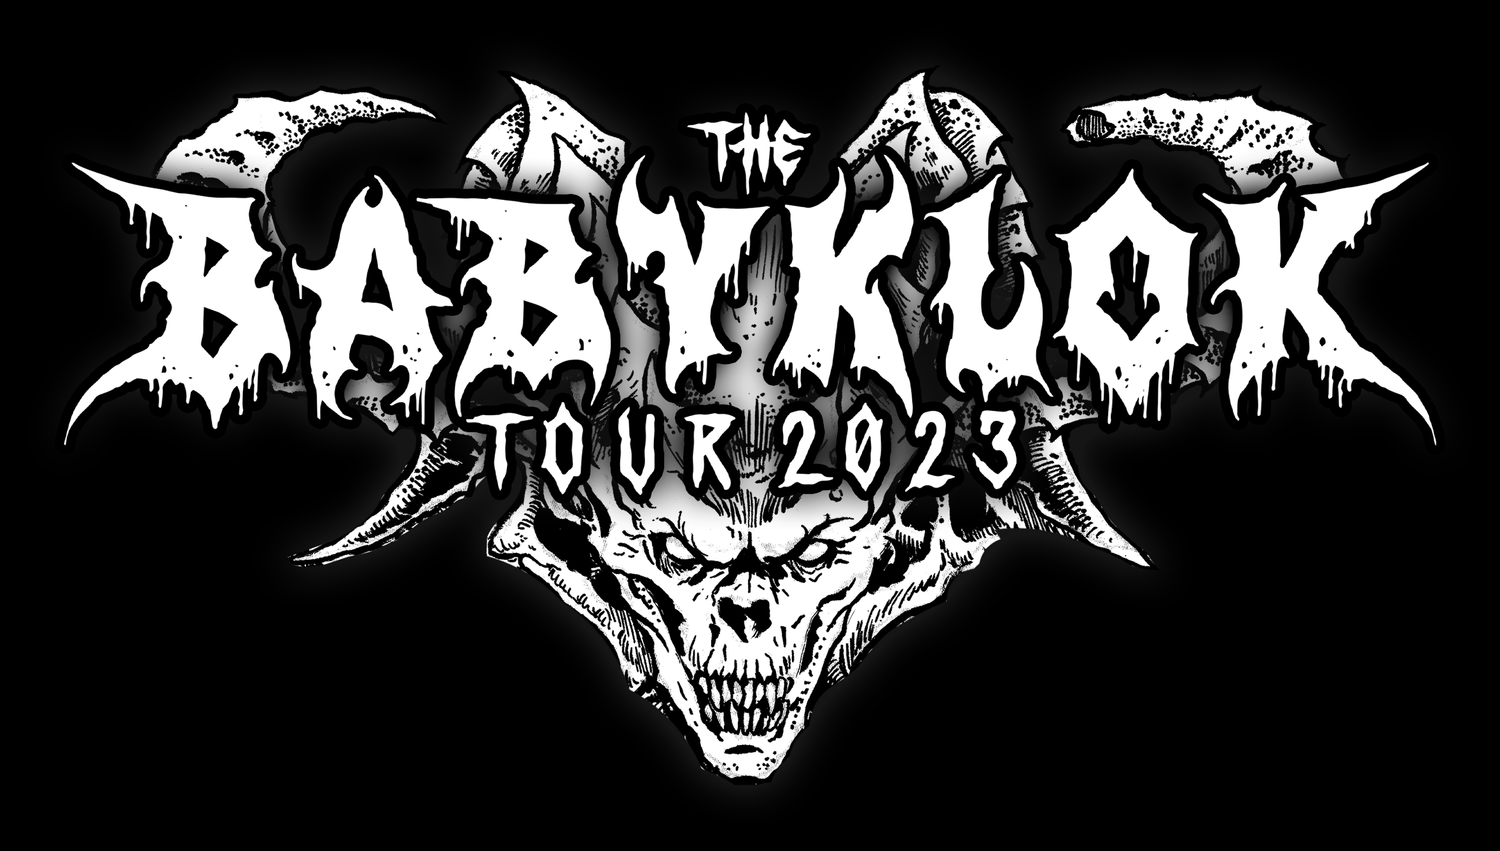 www.thebabykloktour.com